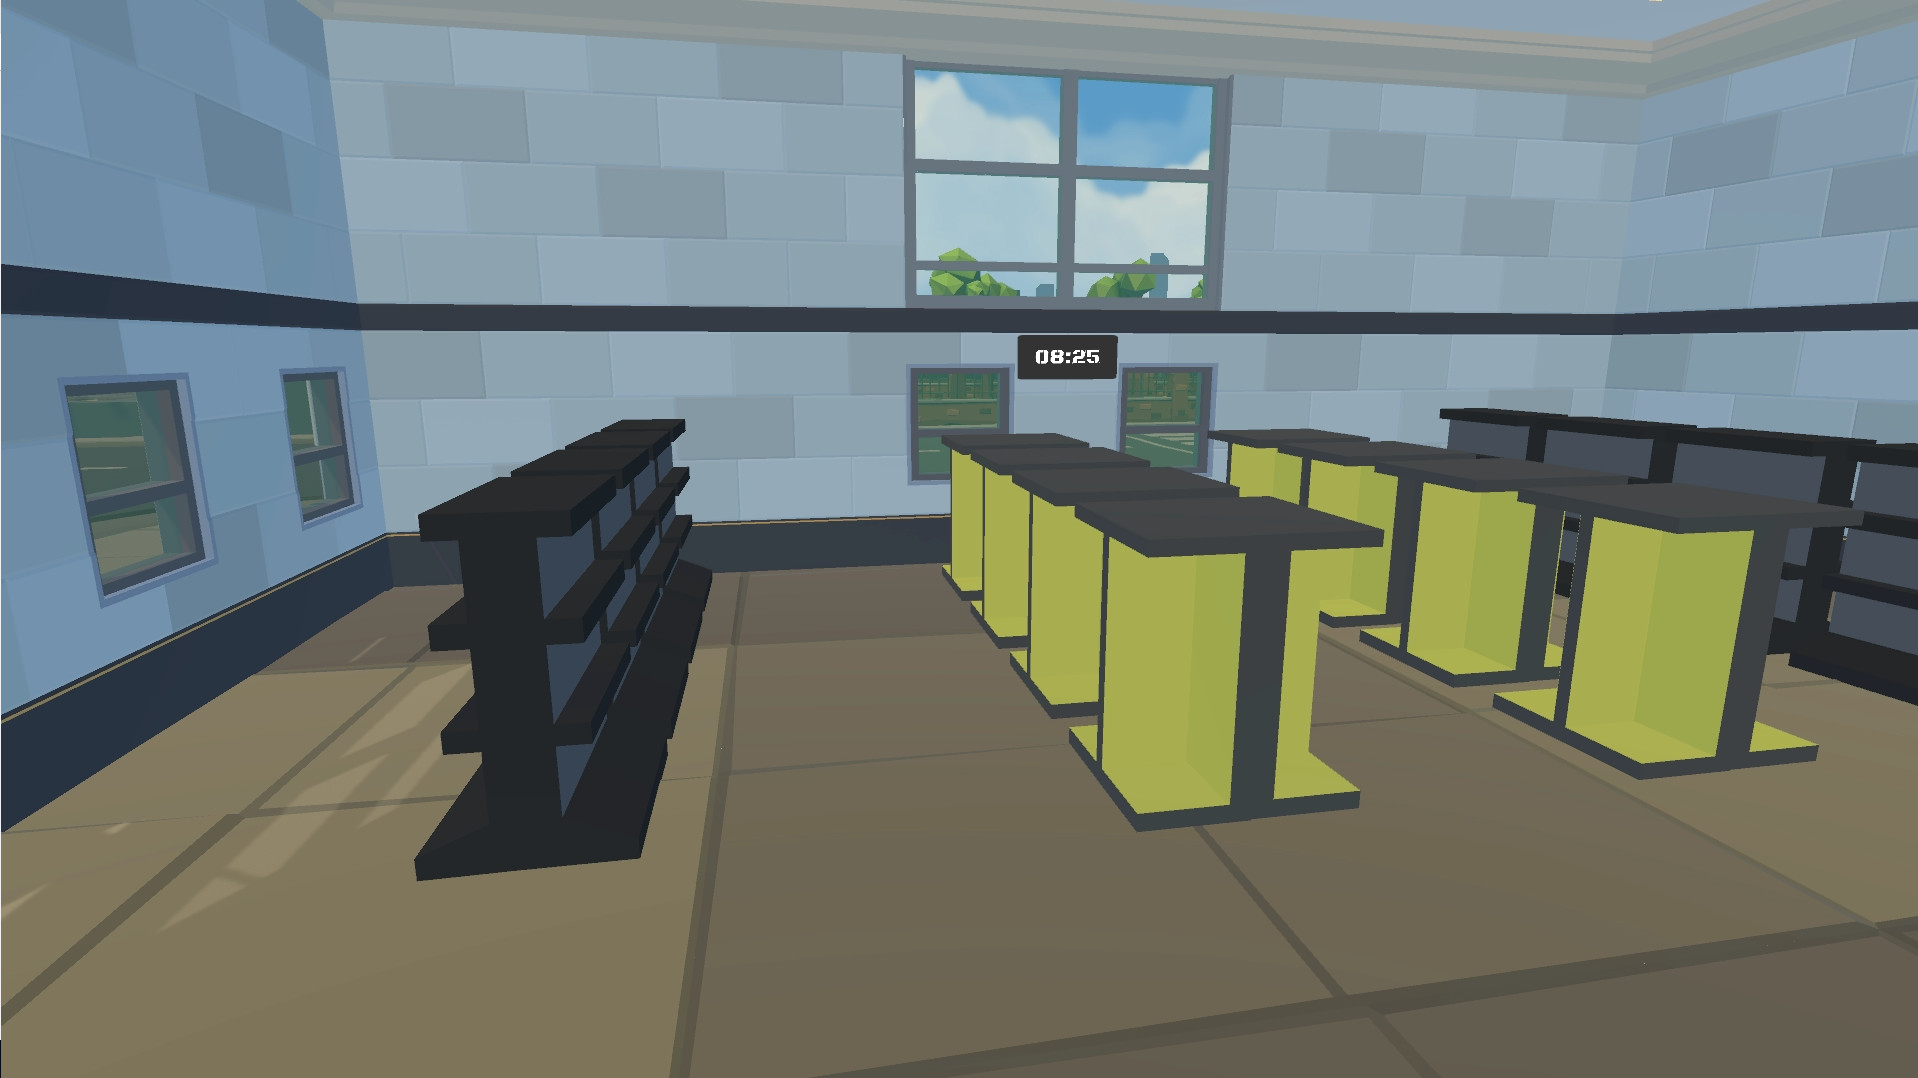 Weaponry Dealer VR screenshot